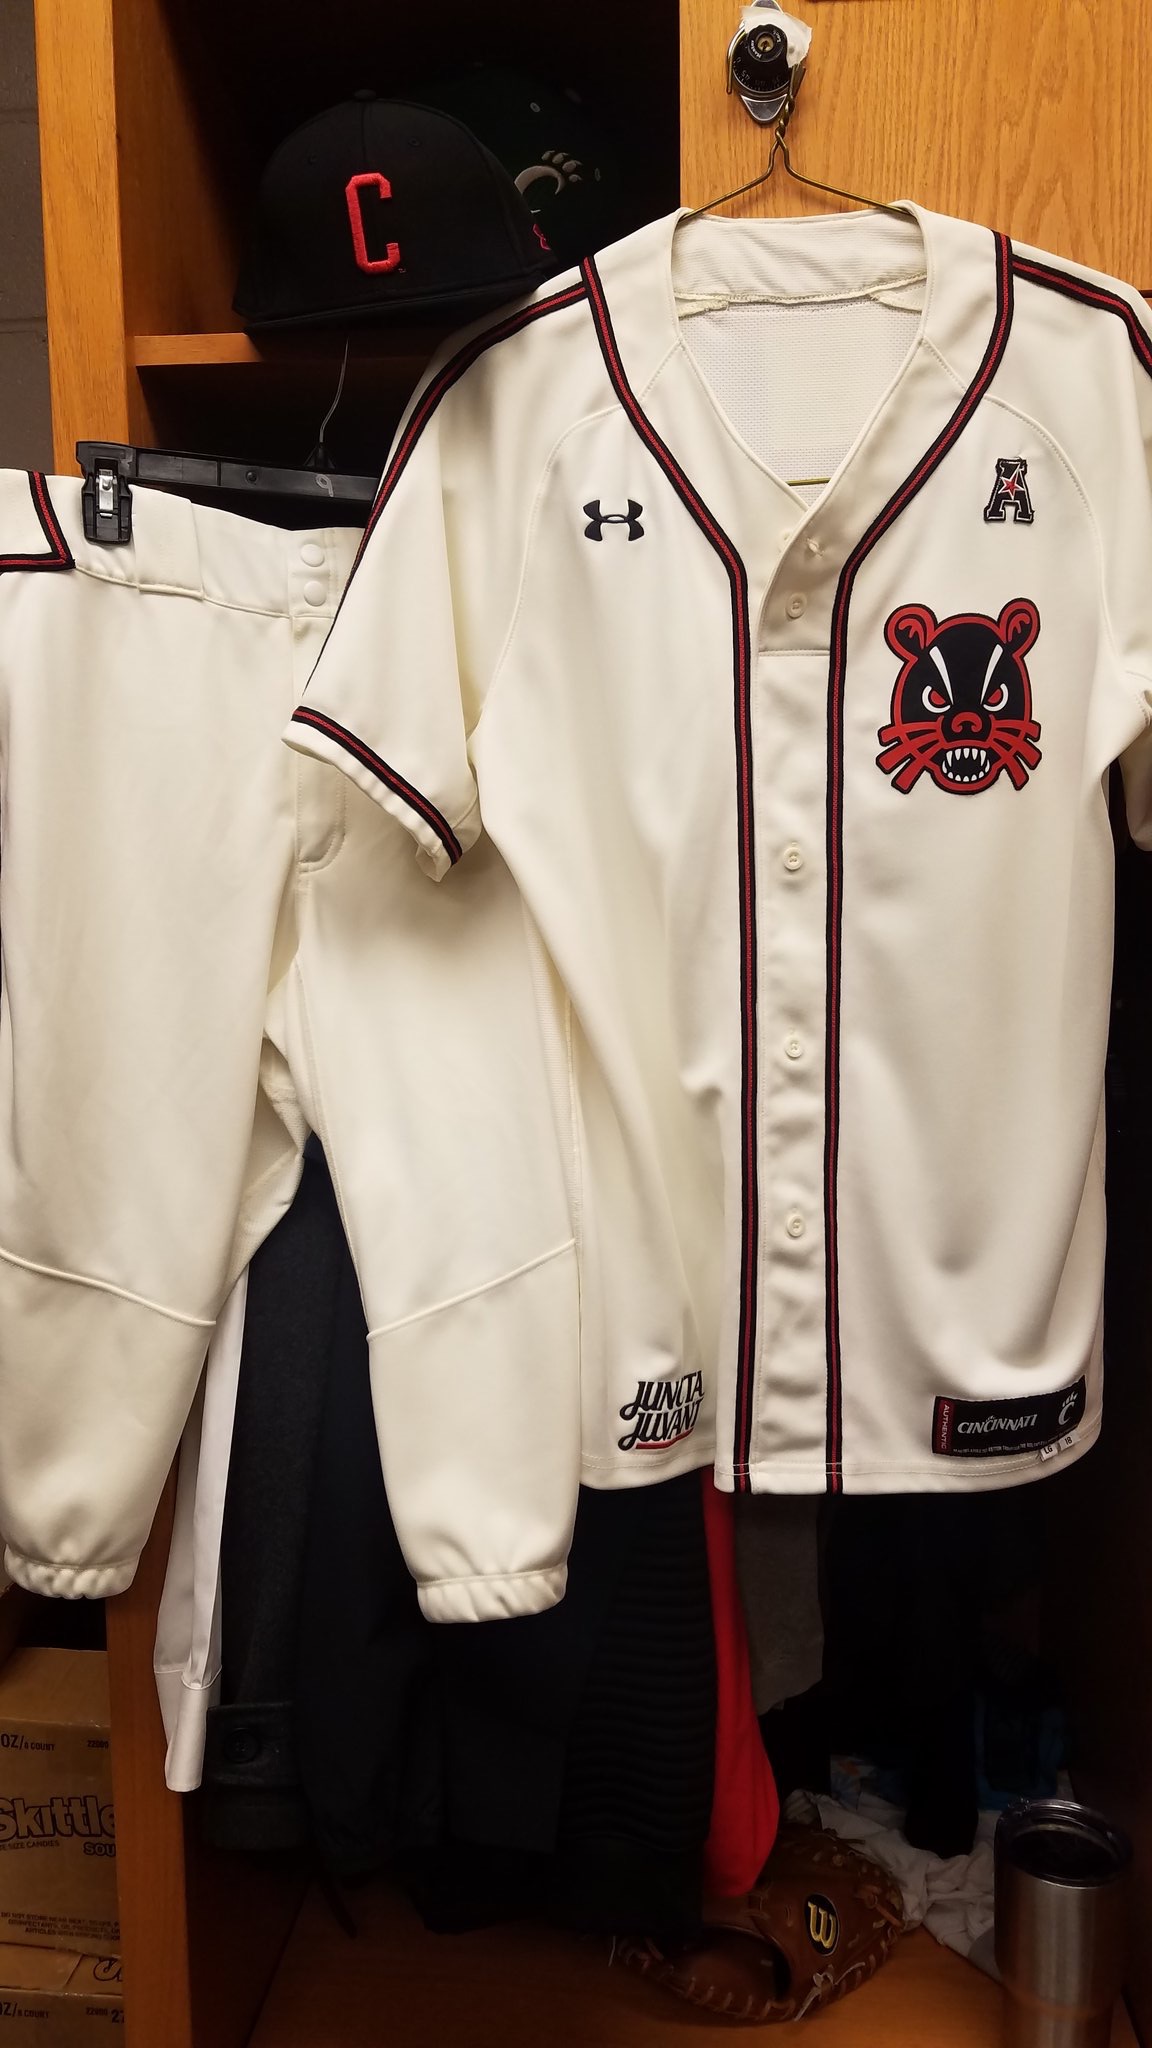 Cincinnati Baseball Throwback Uniform 